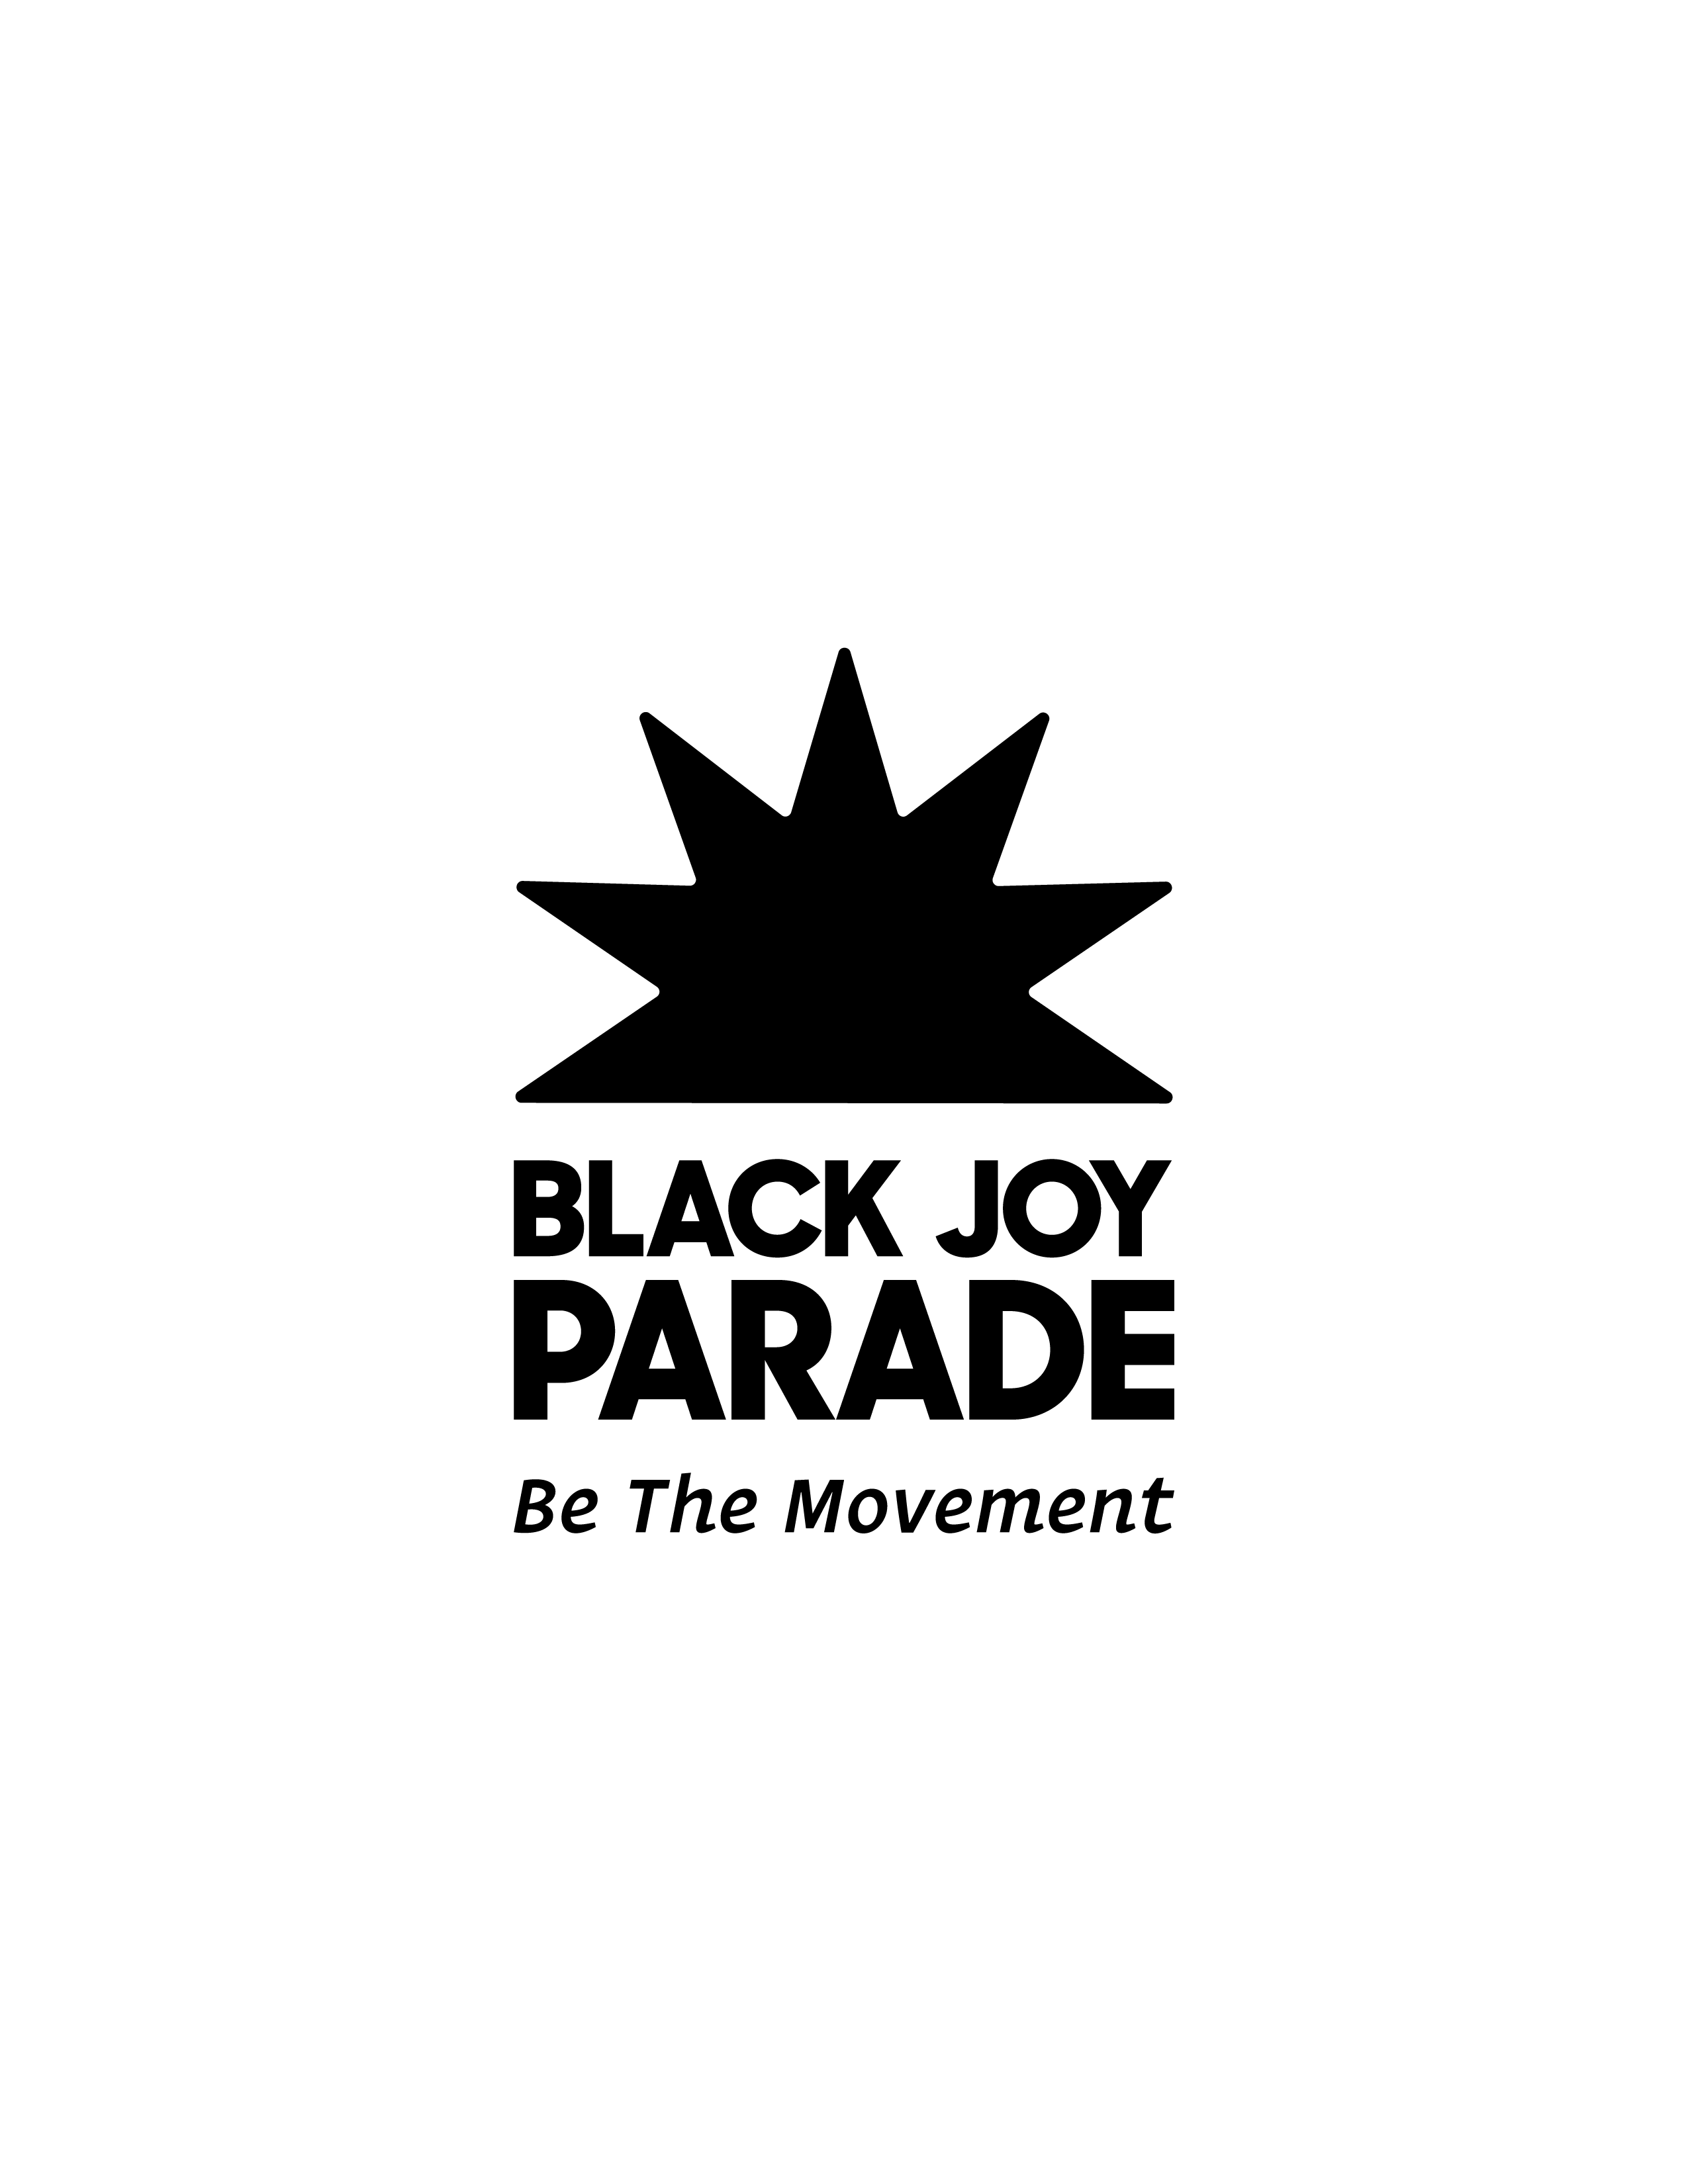 Black Joy Parade logo